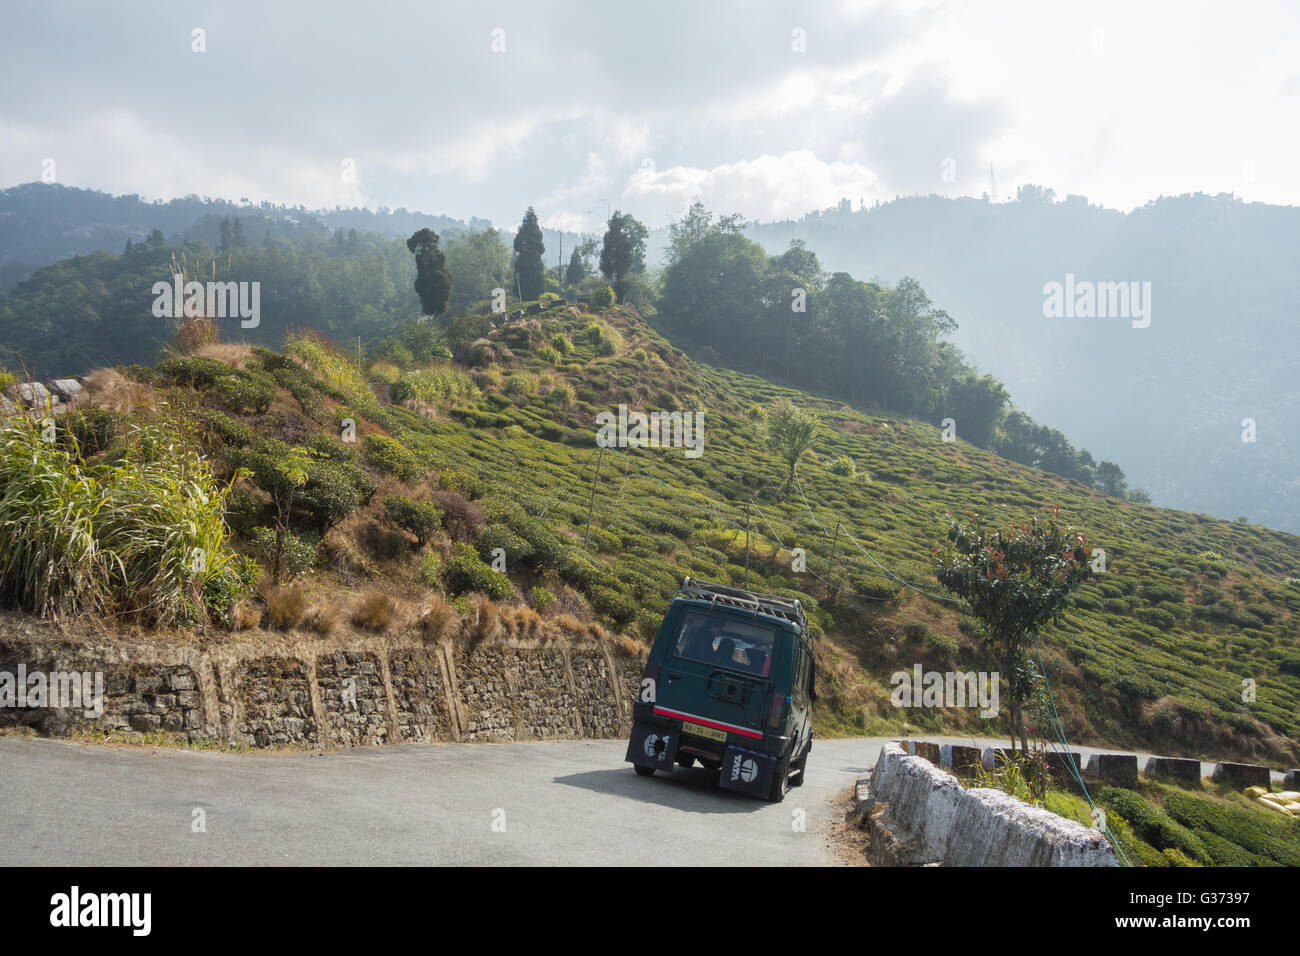 tata-sumo-car-going-downhill-on-bloomfield-road-darjeeling-west-bengal-G37397.jpg